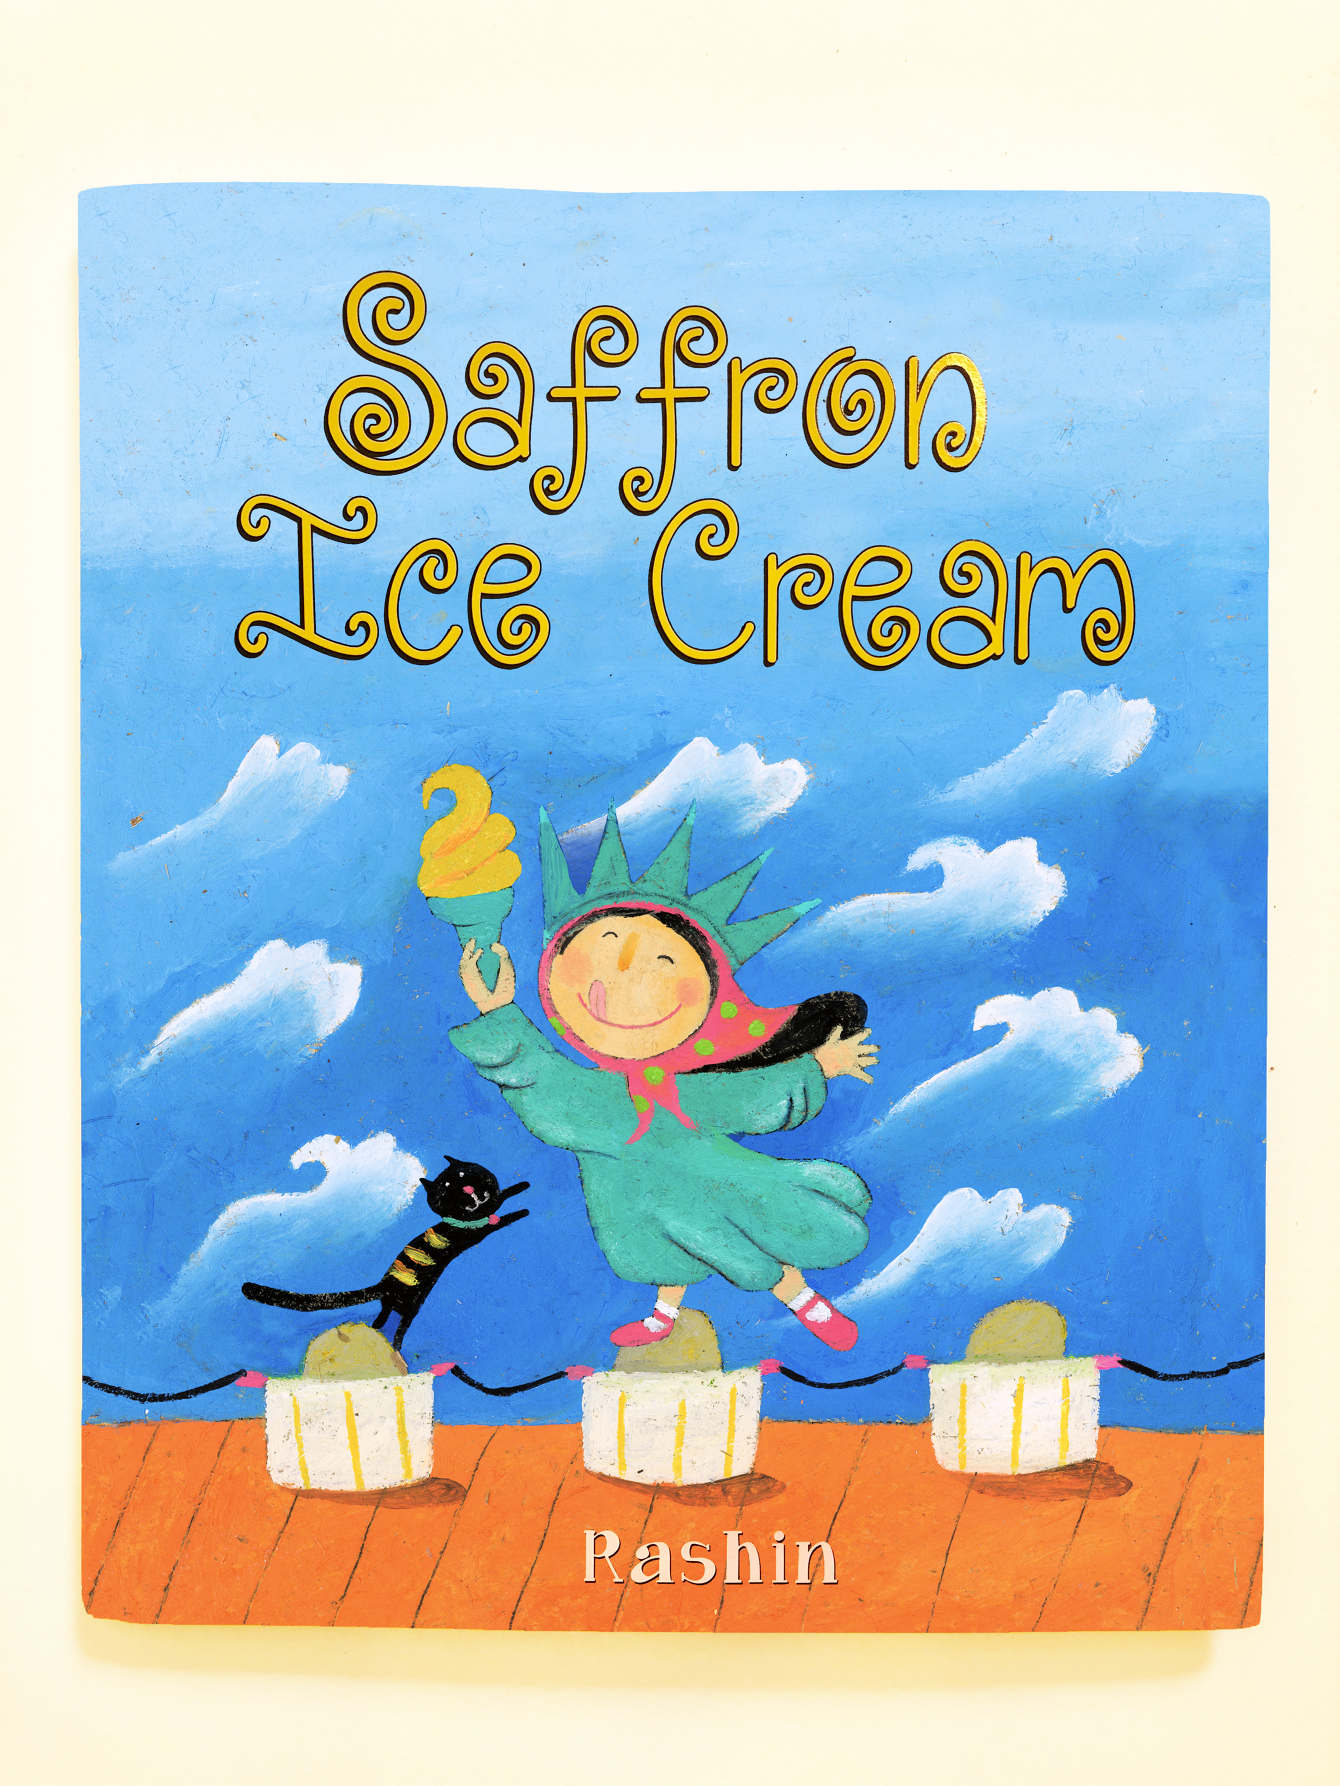 Cover image of the book "Saffron Ice Cream" by Rashin Kheiriyeh